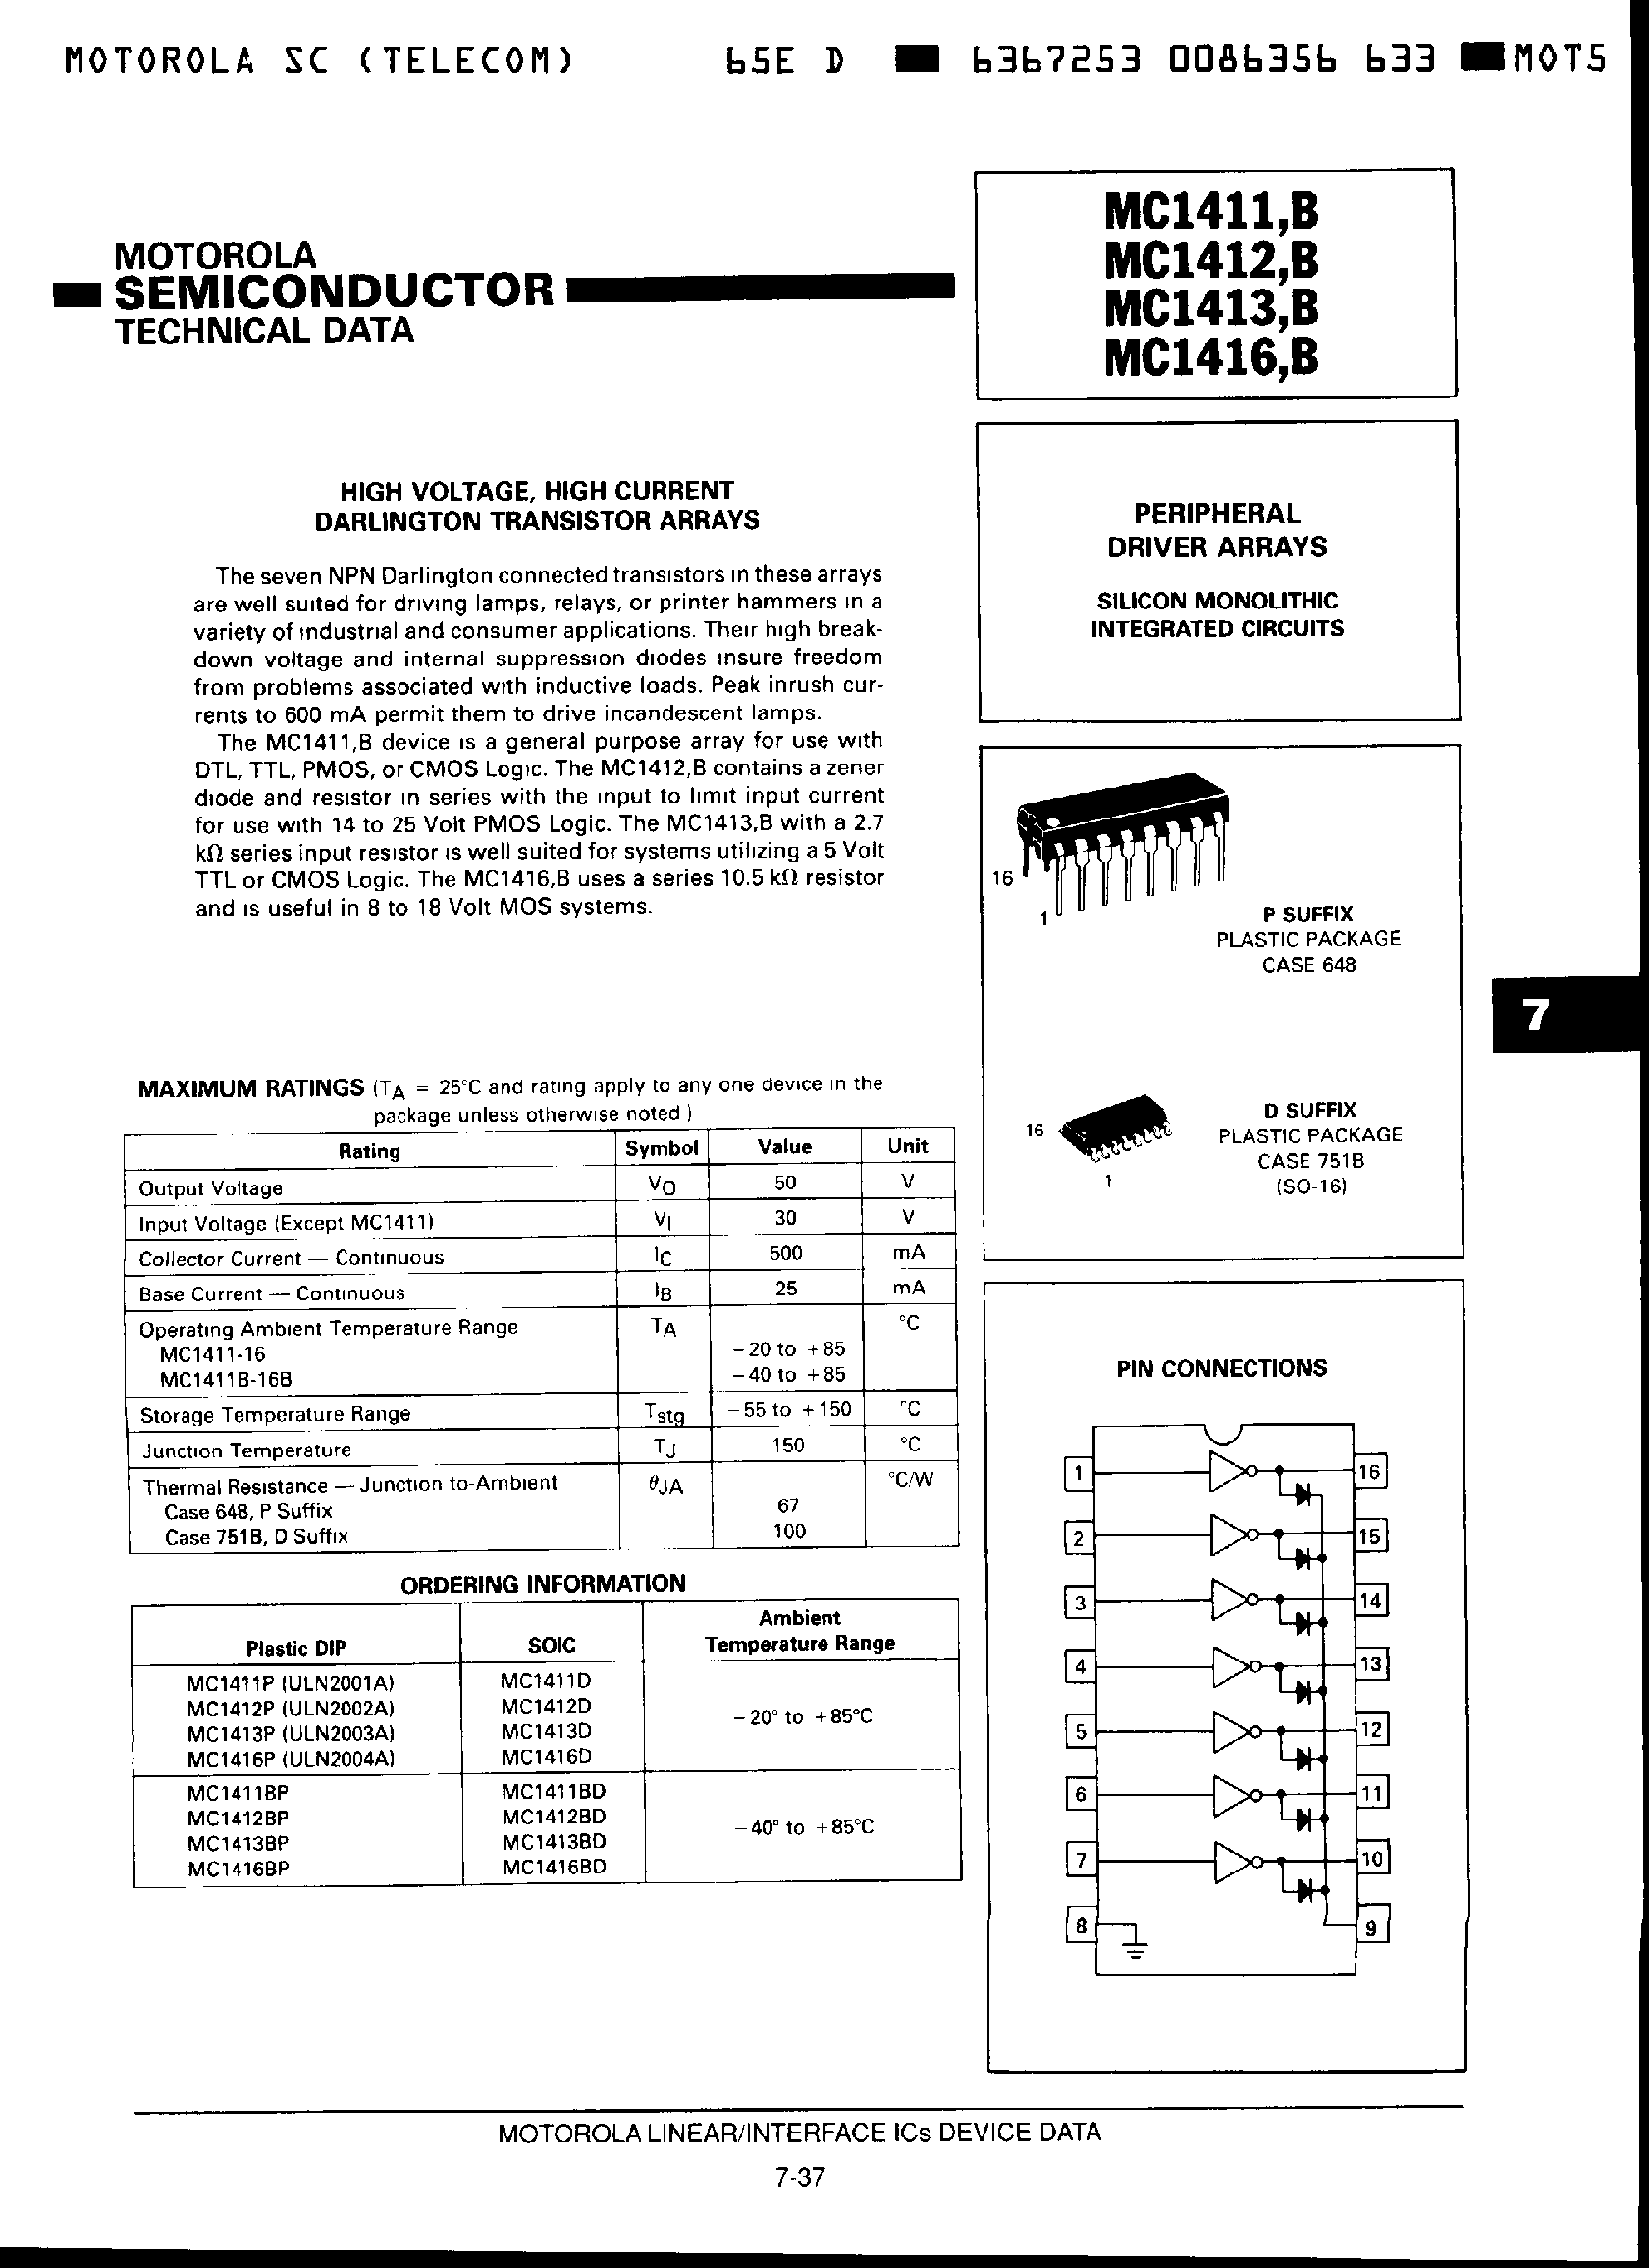 Datasheet MC1412BD - PERIPHERAL DRIVER ARRAYS page 1